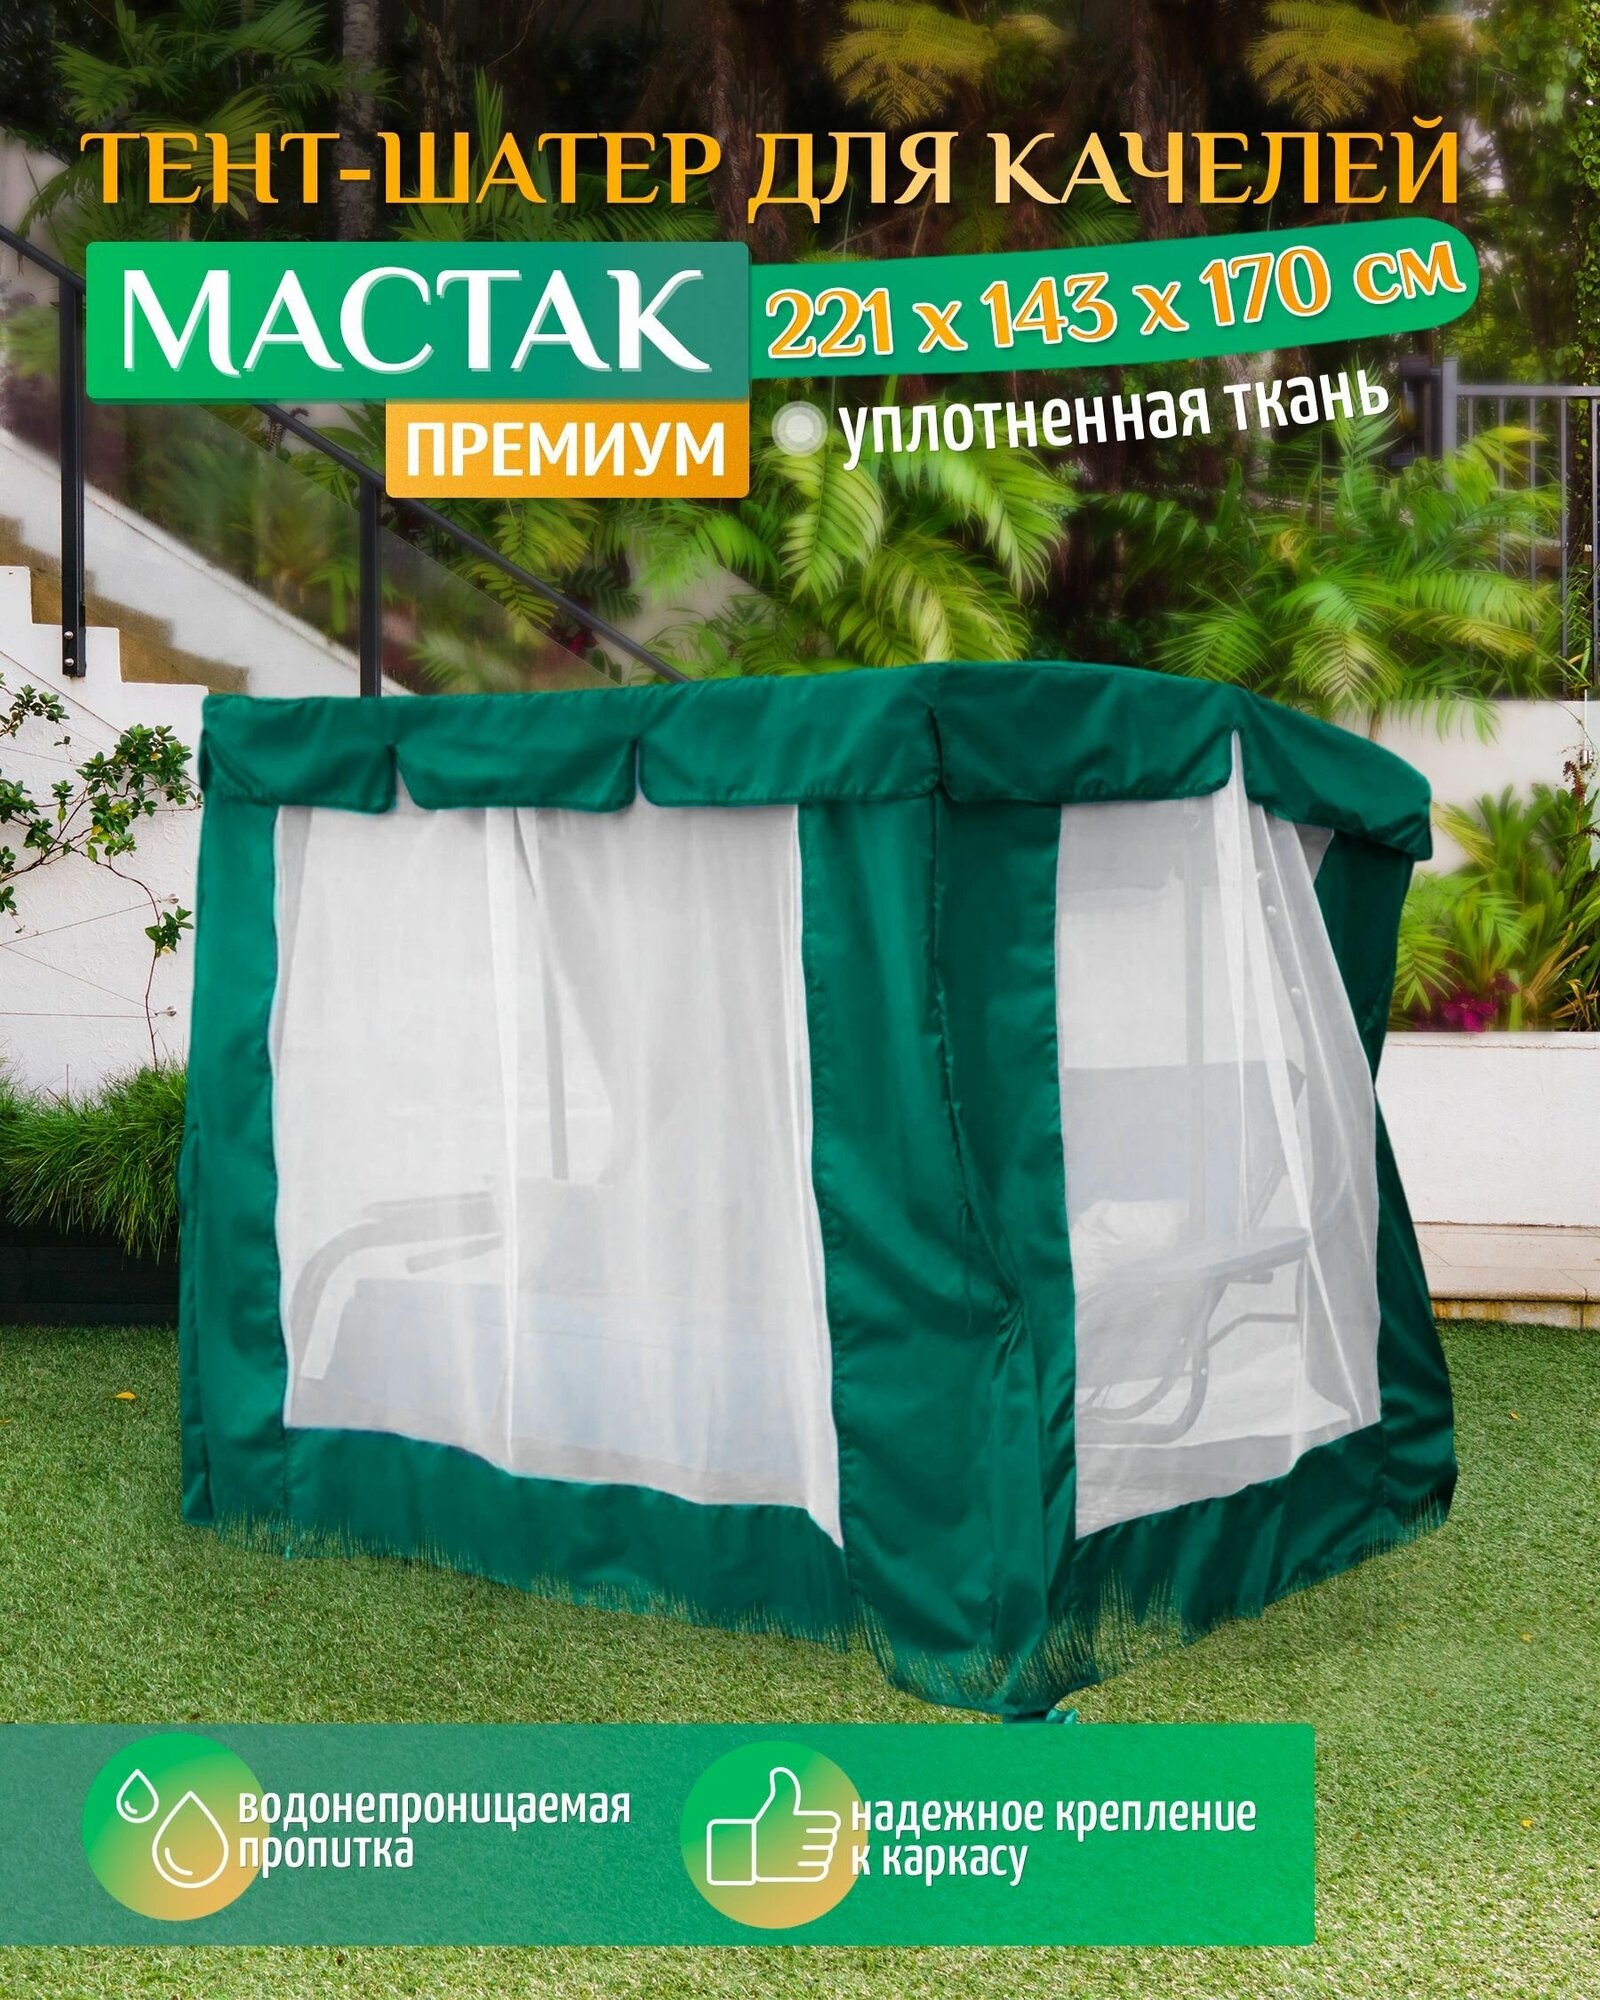 Тент шатер для качелей Мастак премиум (221х143х170 см) зеленый